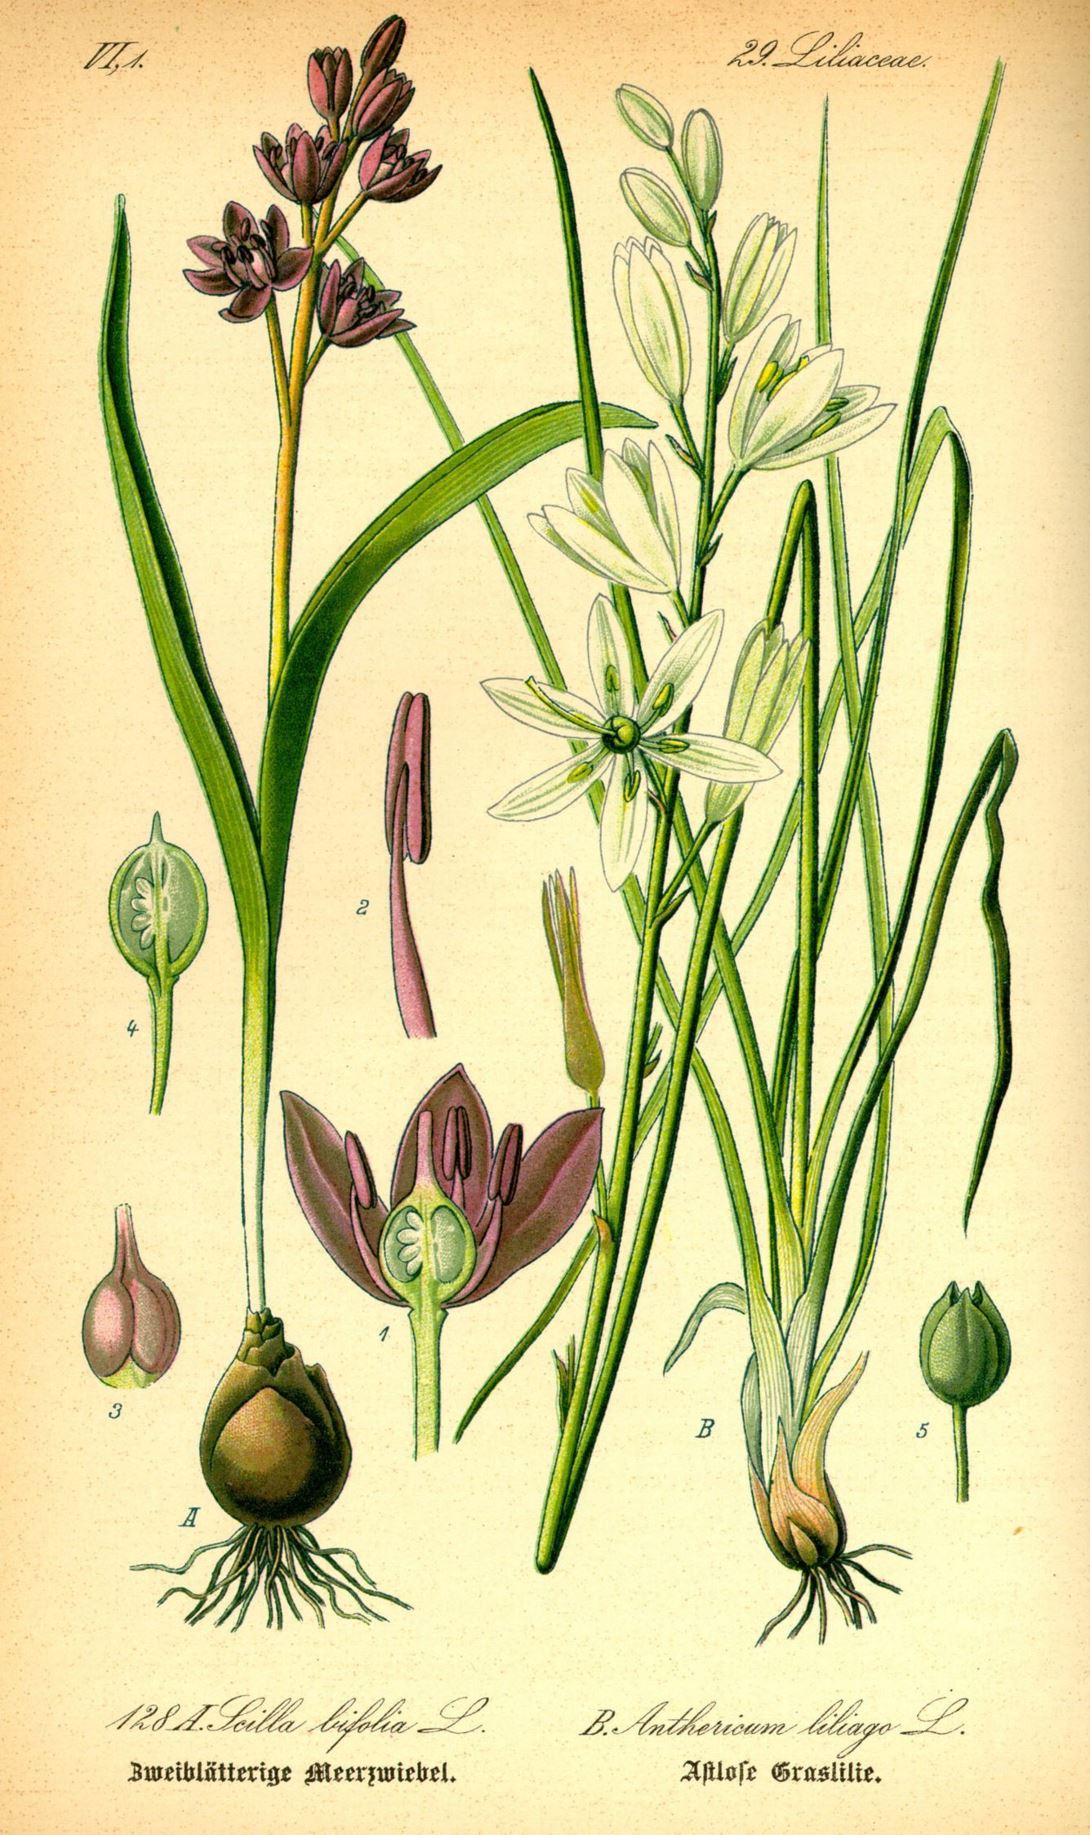 Scilla bifolia - Vroege sterhyacint